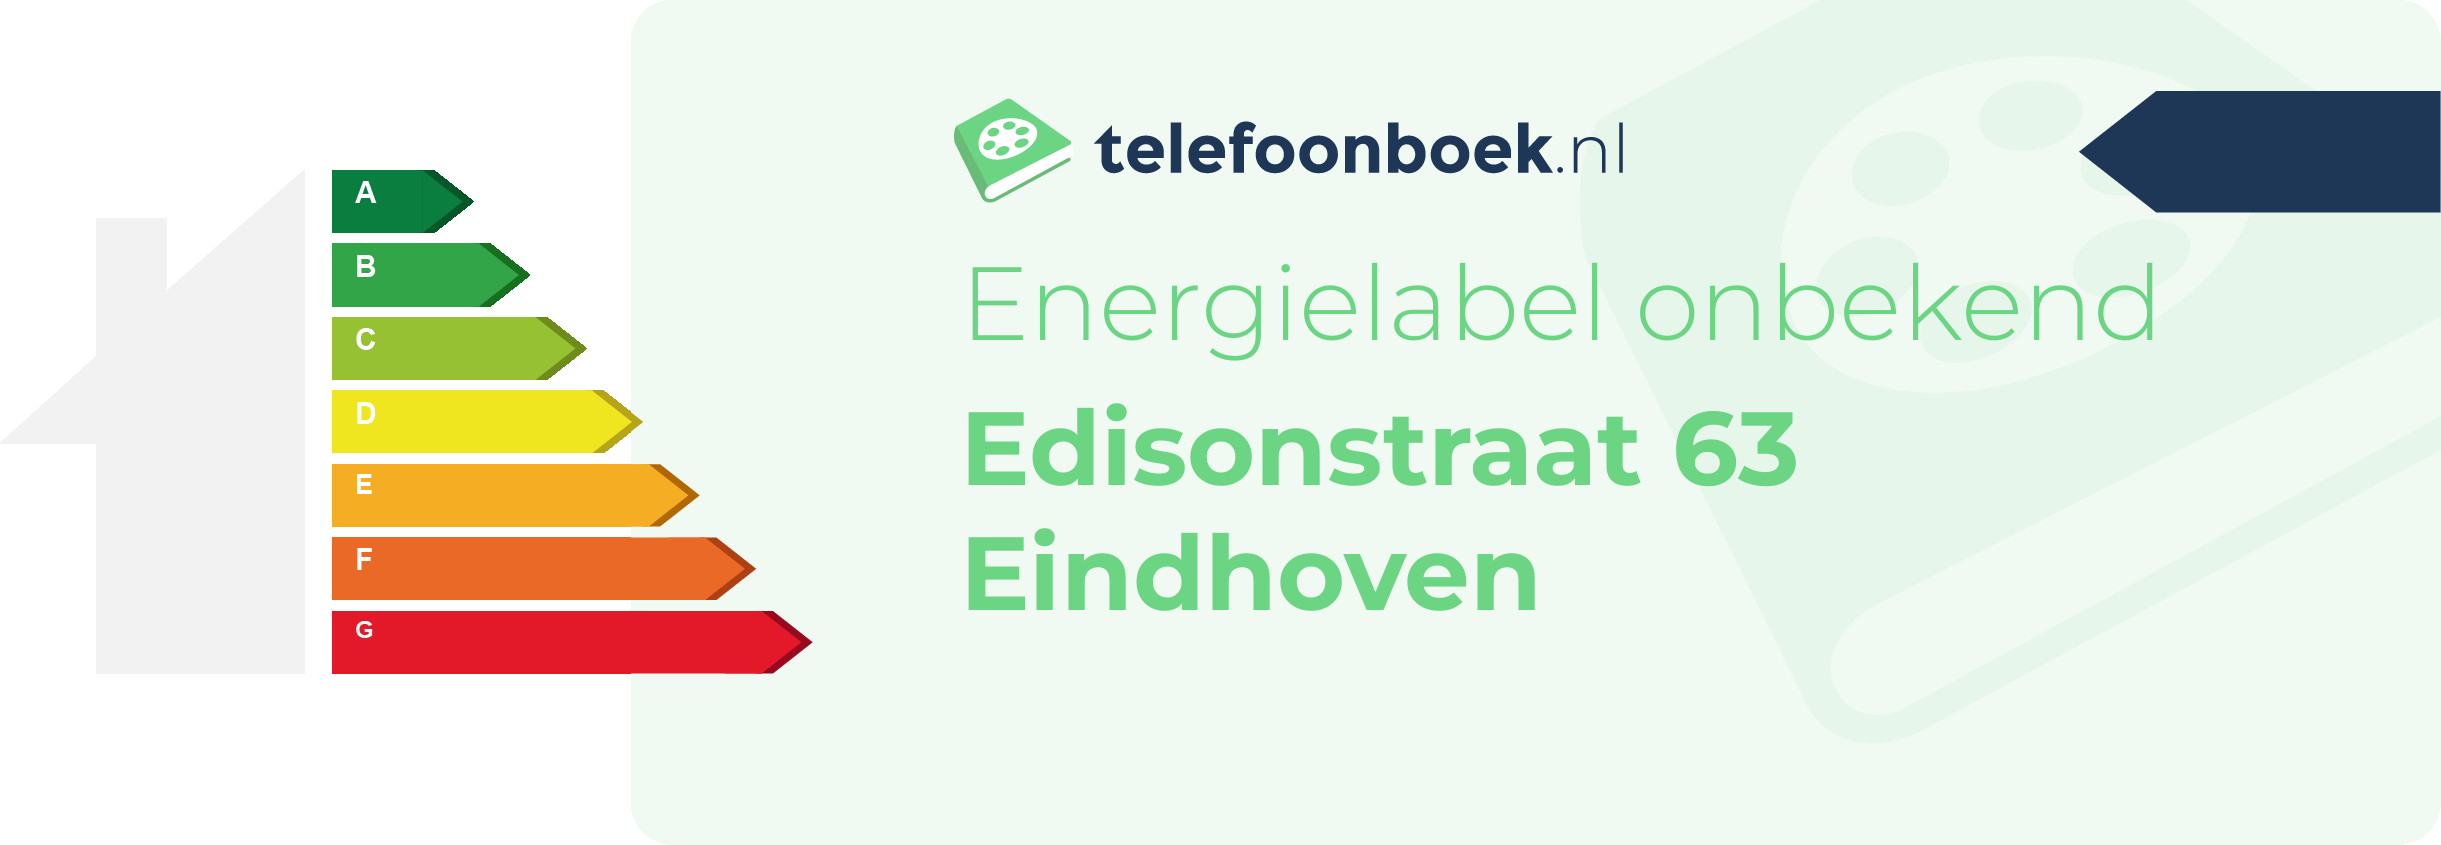 Energielabel Edisonstraat 63 Eindhoven